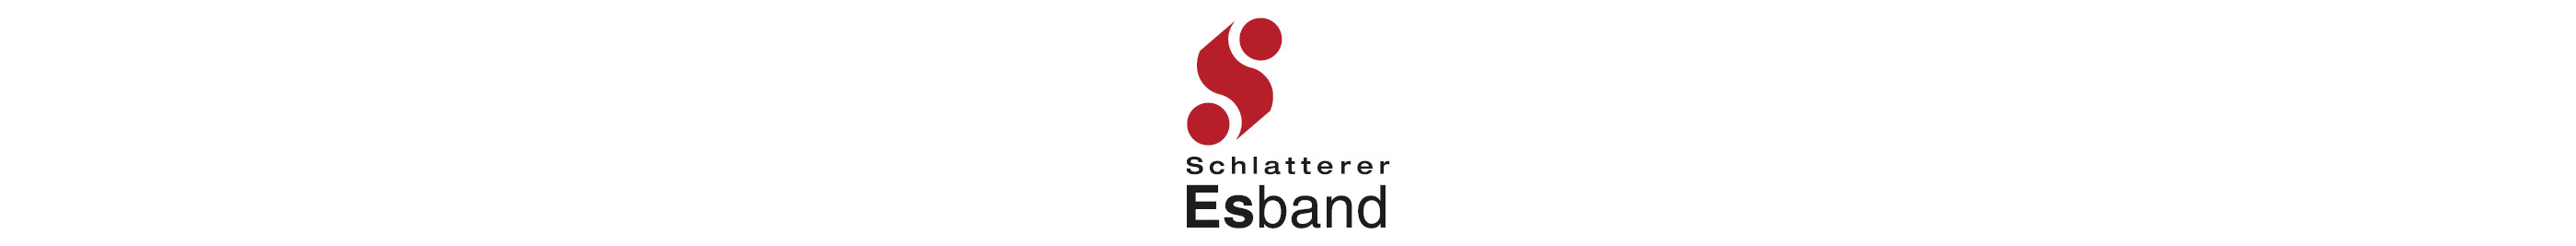 Schlatterer-Esband_eShop.jpg